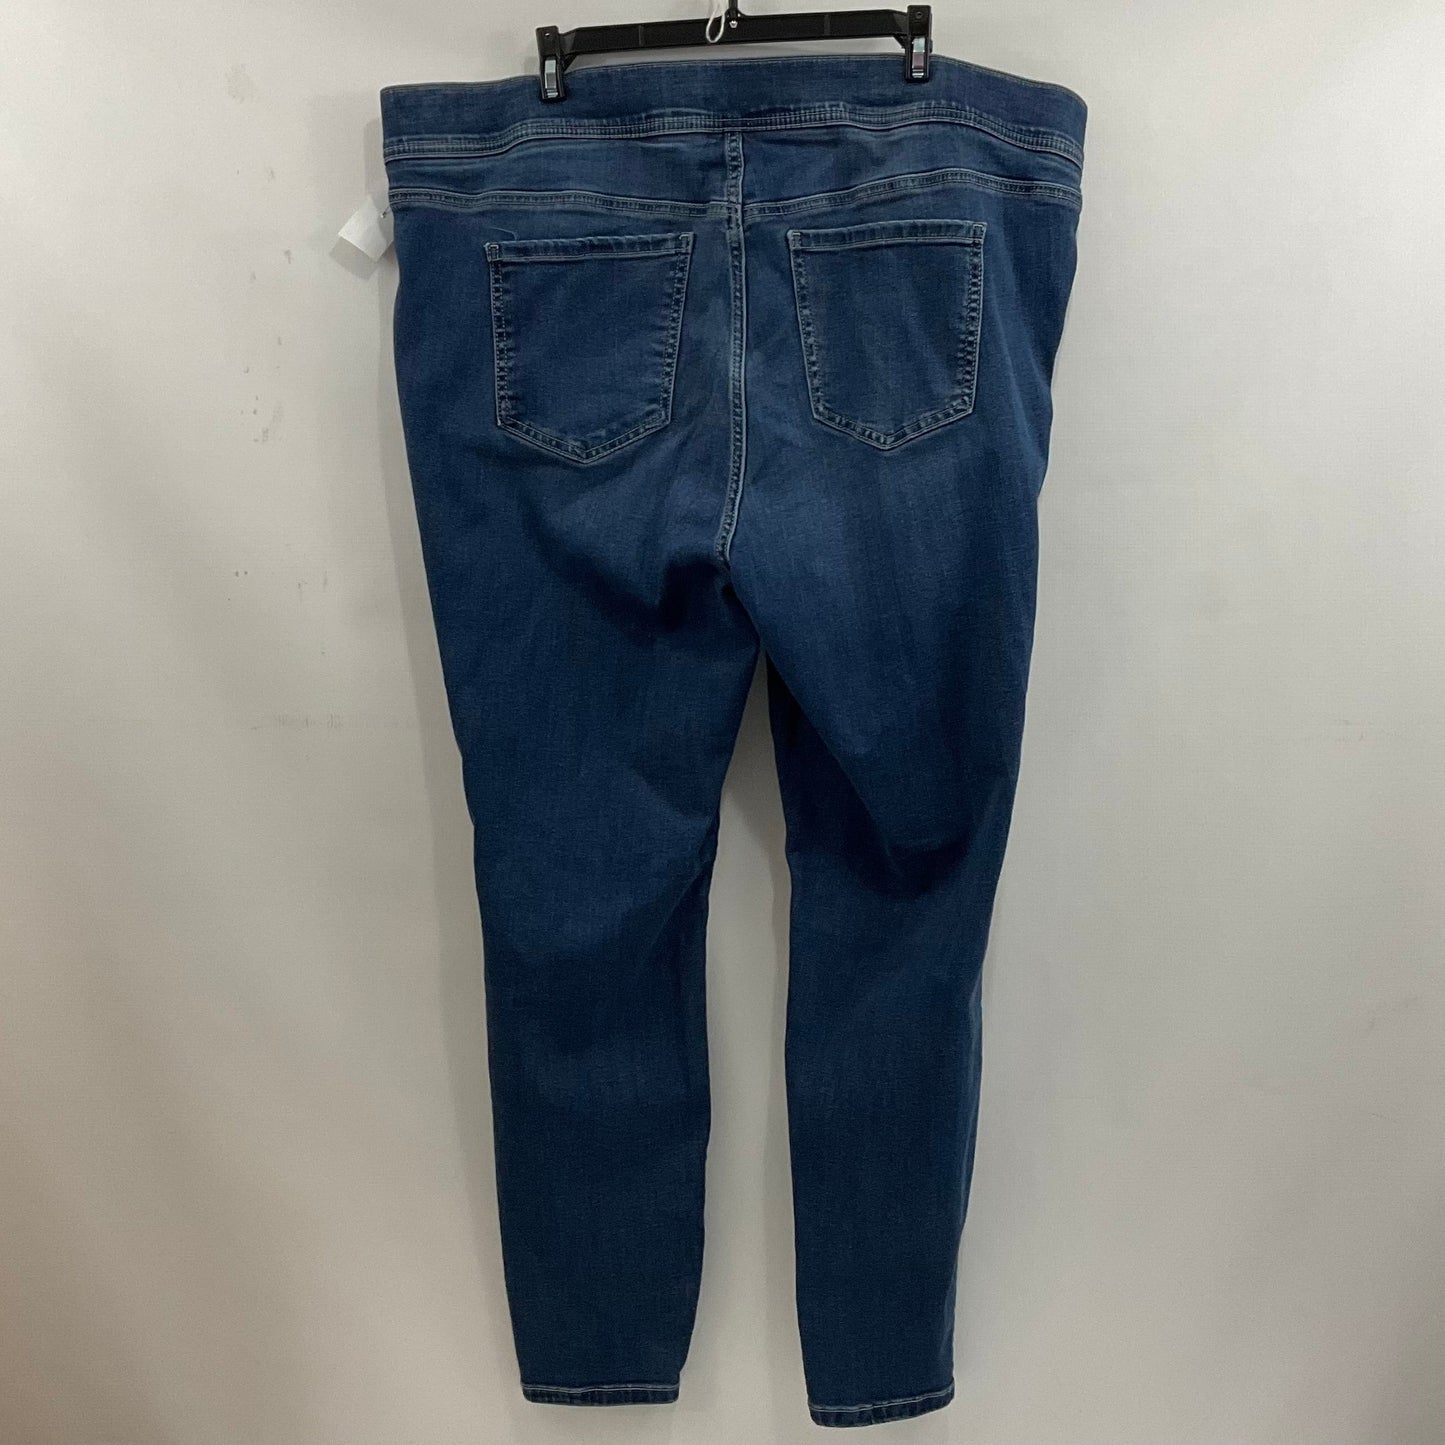 Jeans Skinny By Torrid  Size: 3x